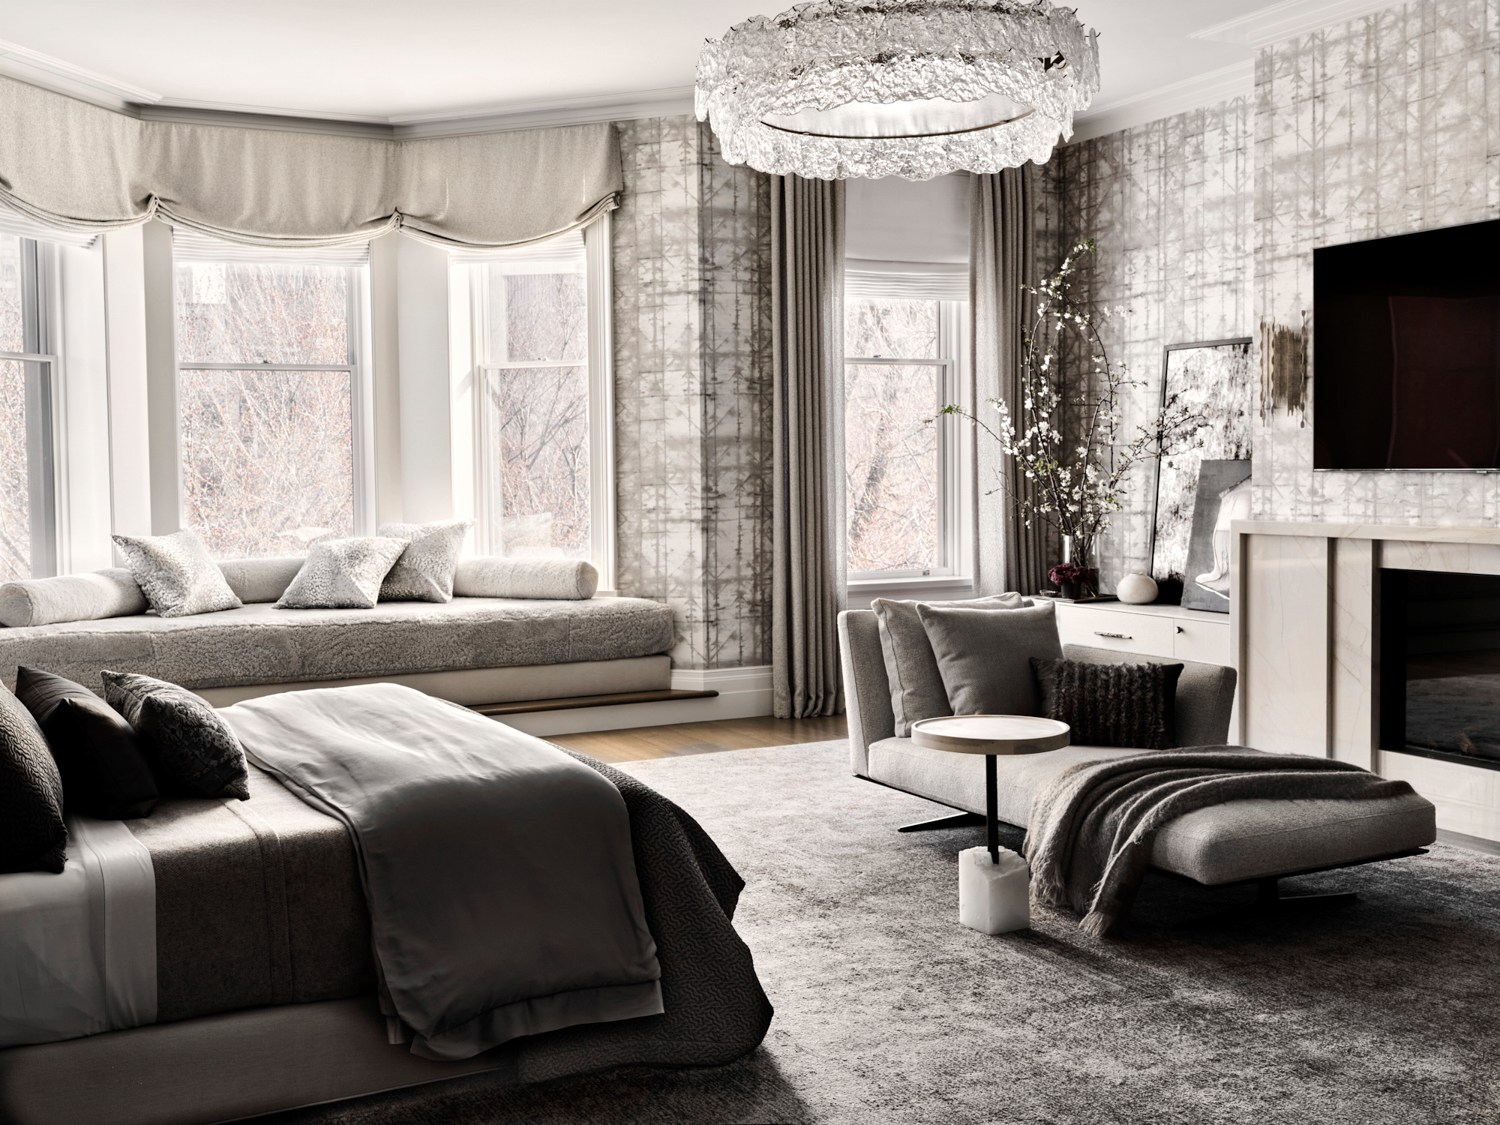 Nicole Hogarty Designs grey bedroom with fireplace chandelier Best of the Rest Interior Design RED Winner